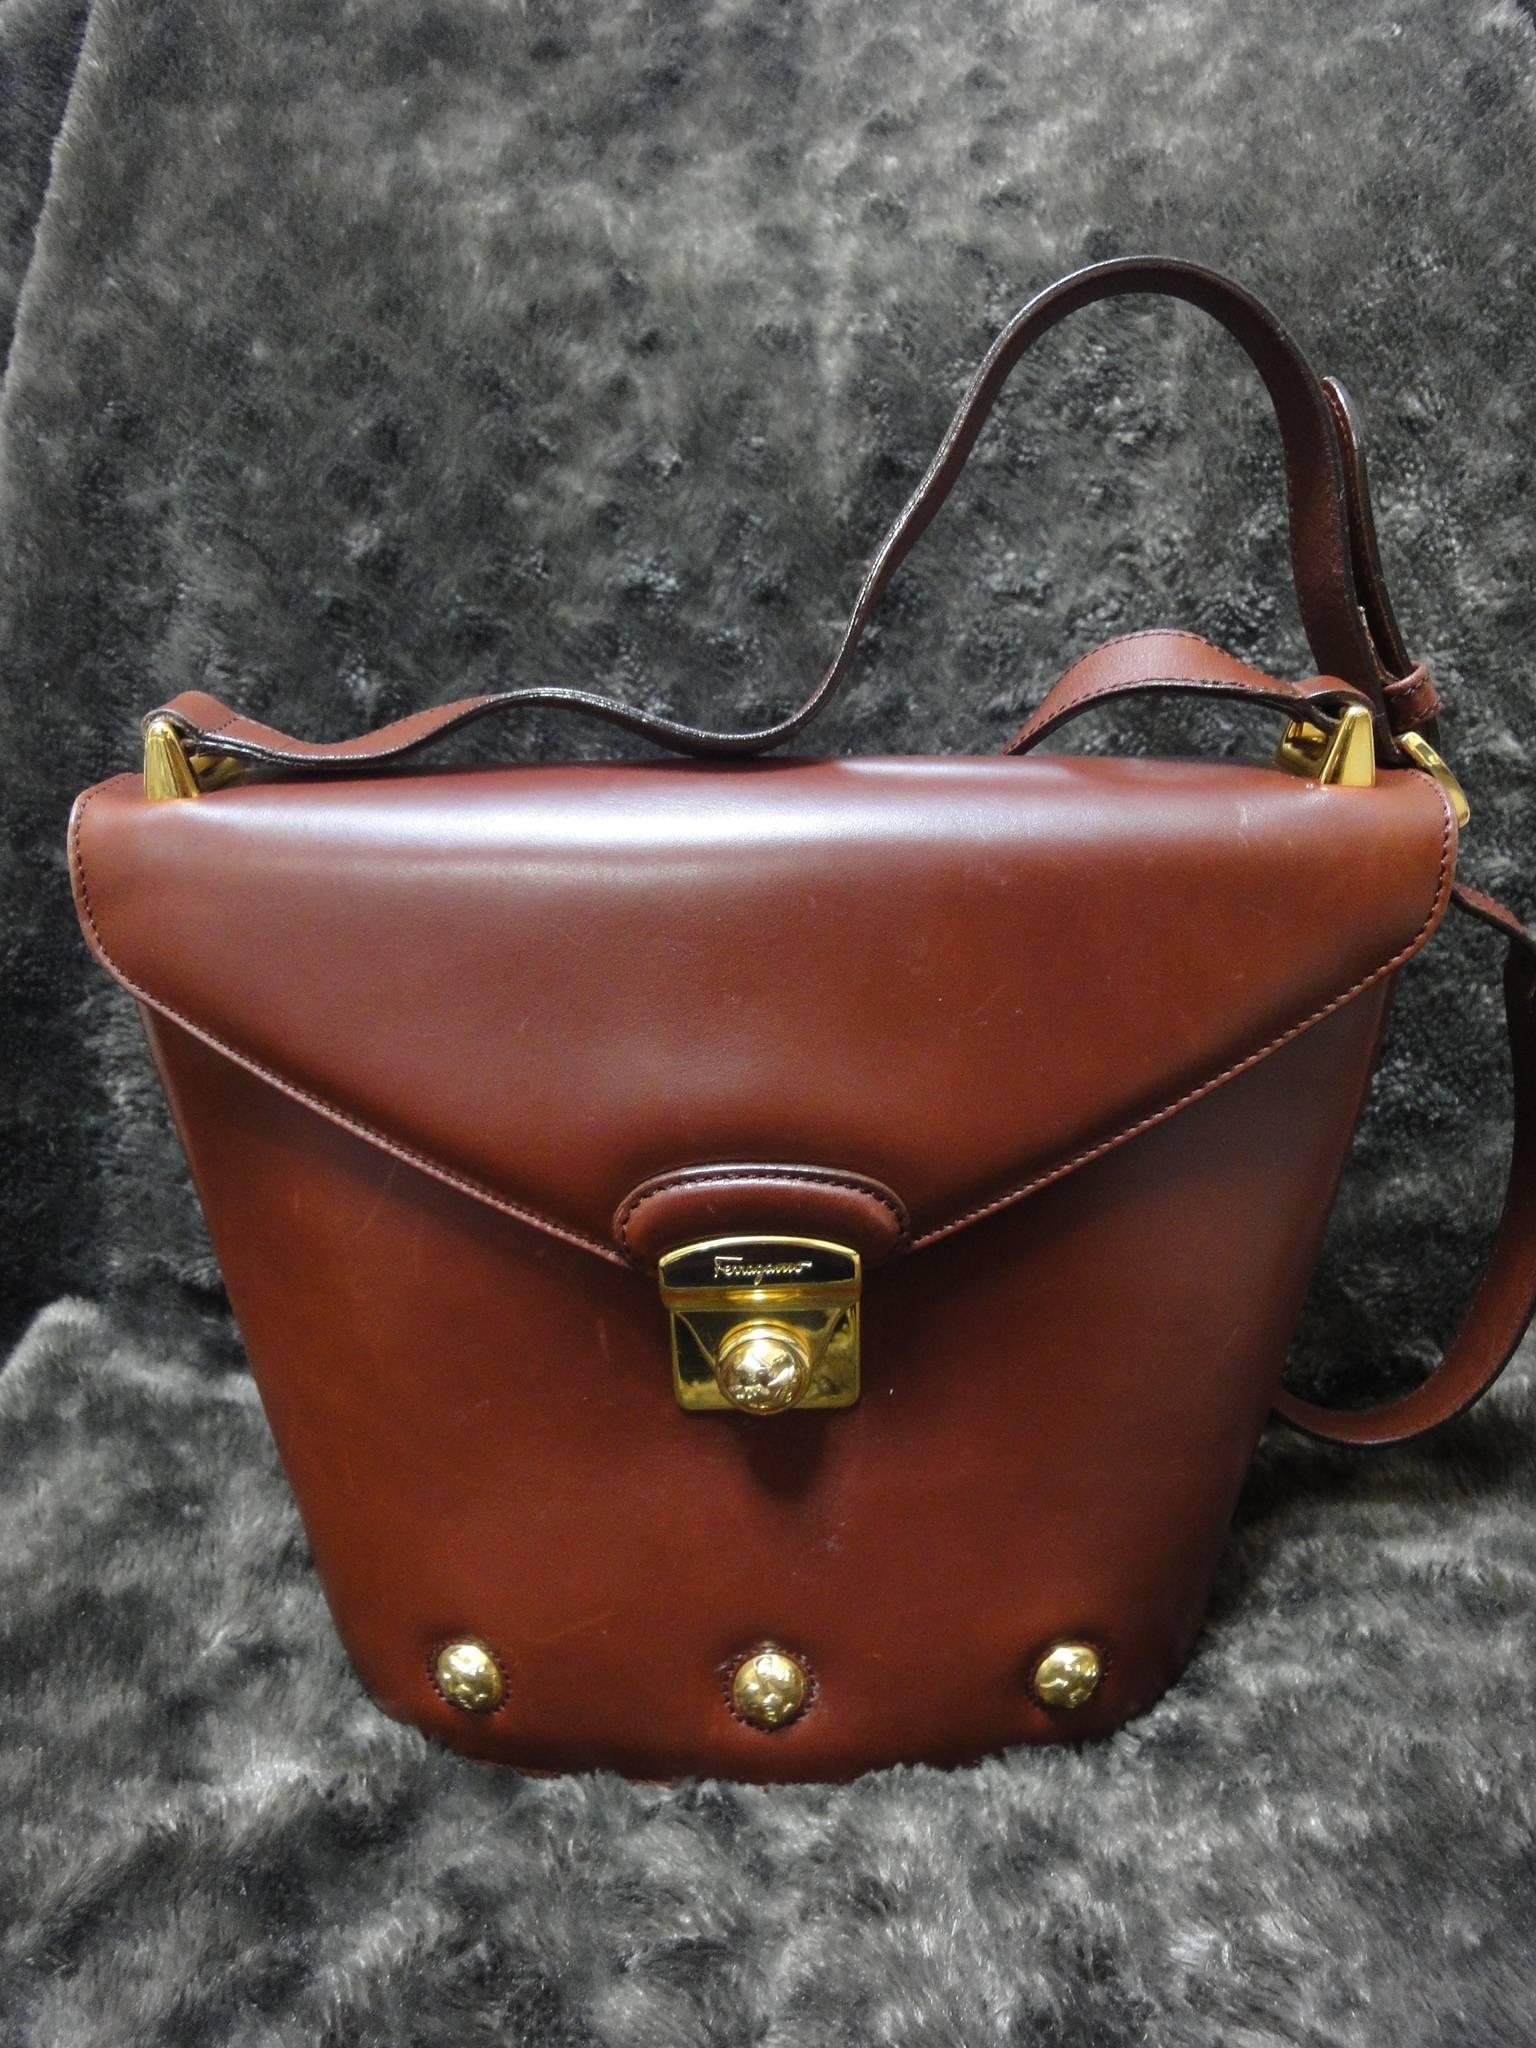 Vintage Salvatore Ferragamo brown leather trapezoidal shape purse with motifs. 3